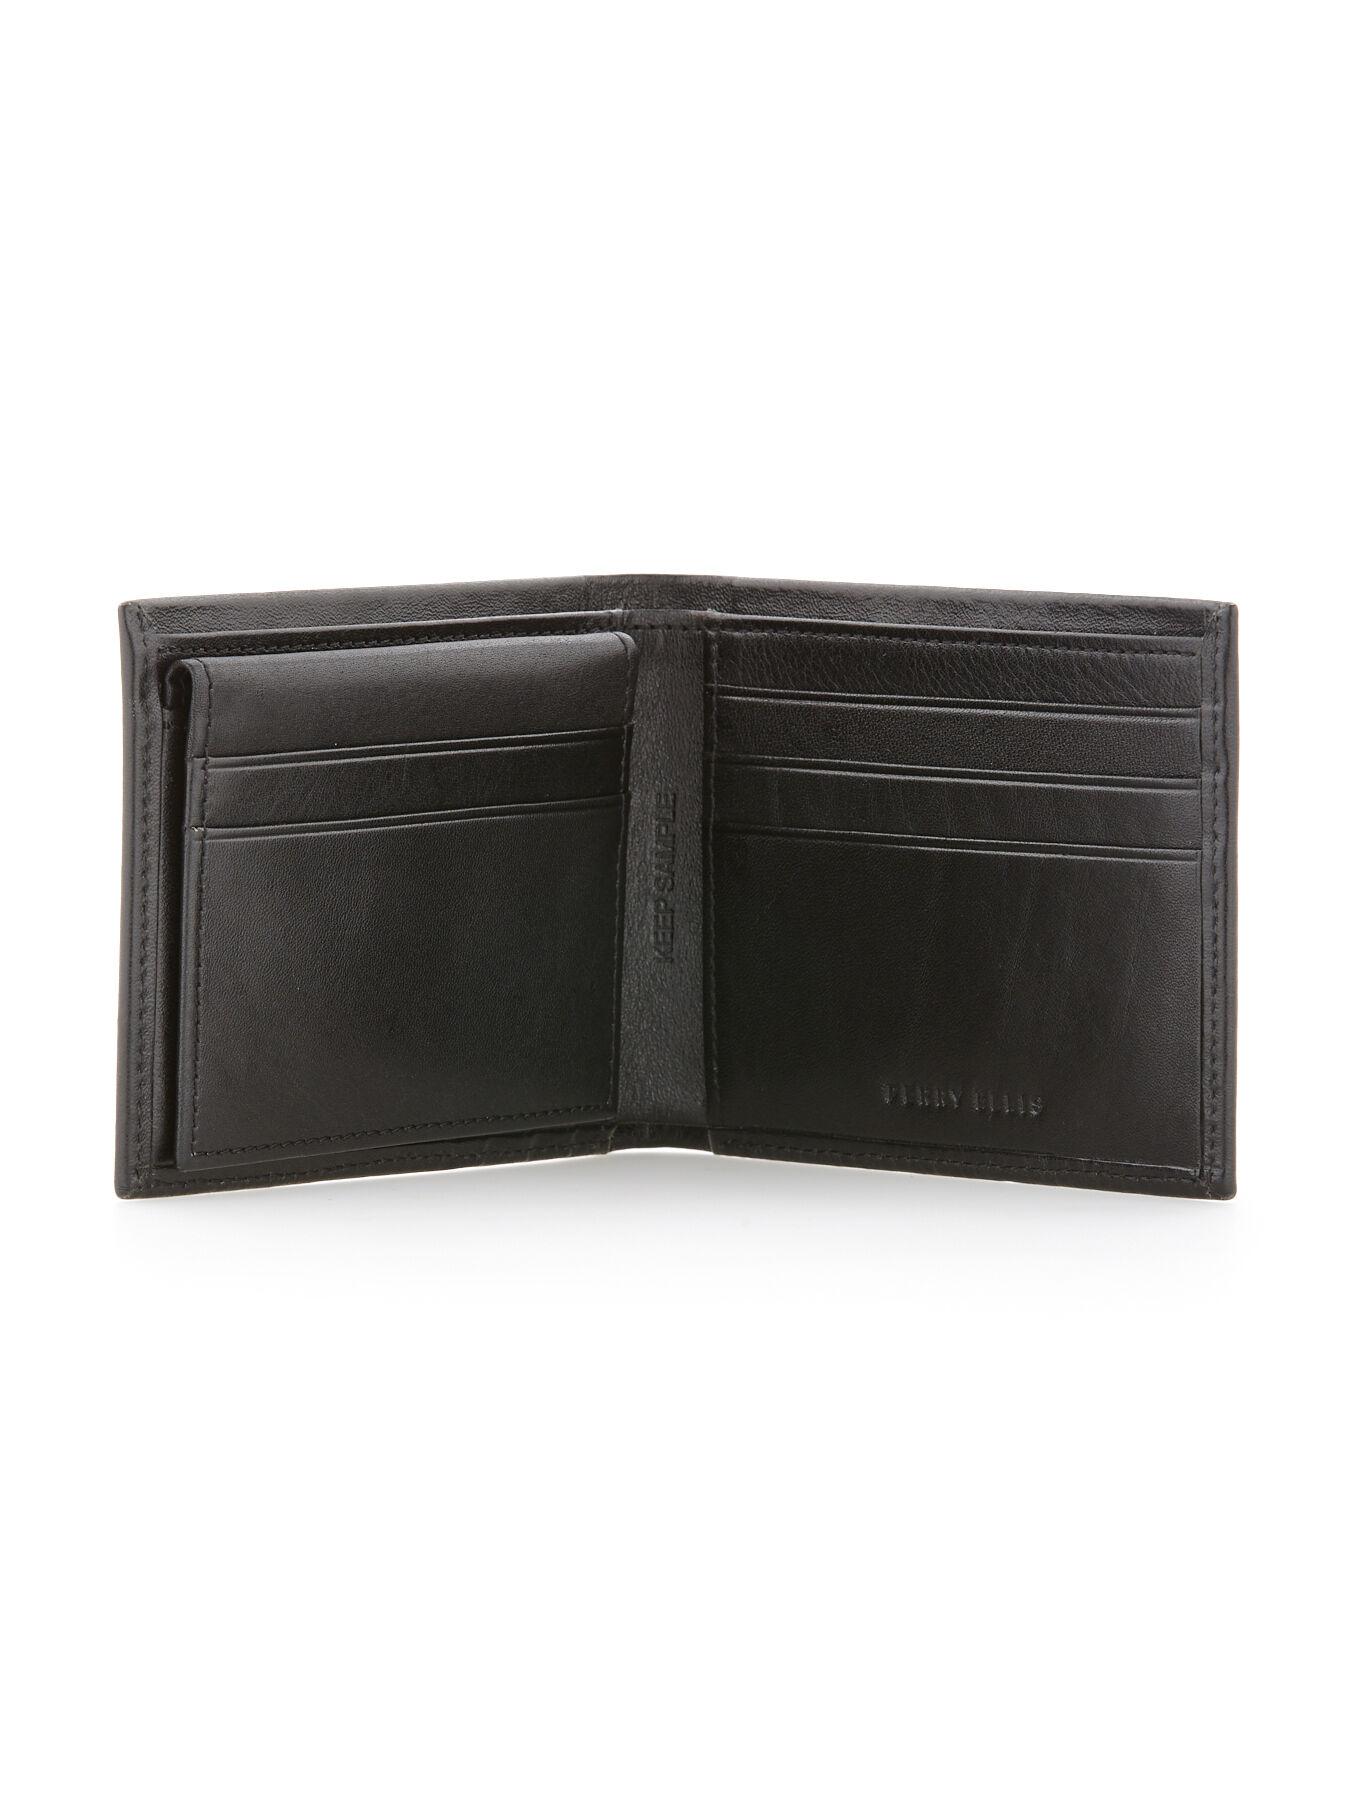 Perry Ellis Genuine Glazed Leather Wallet in Black for Men - Lyst